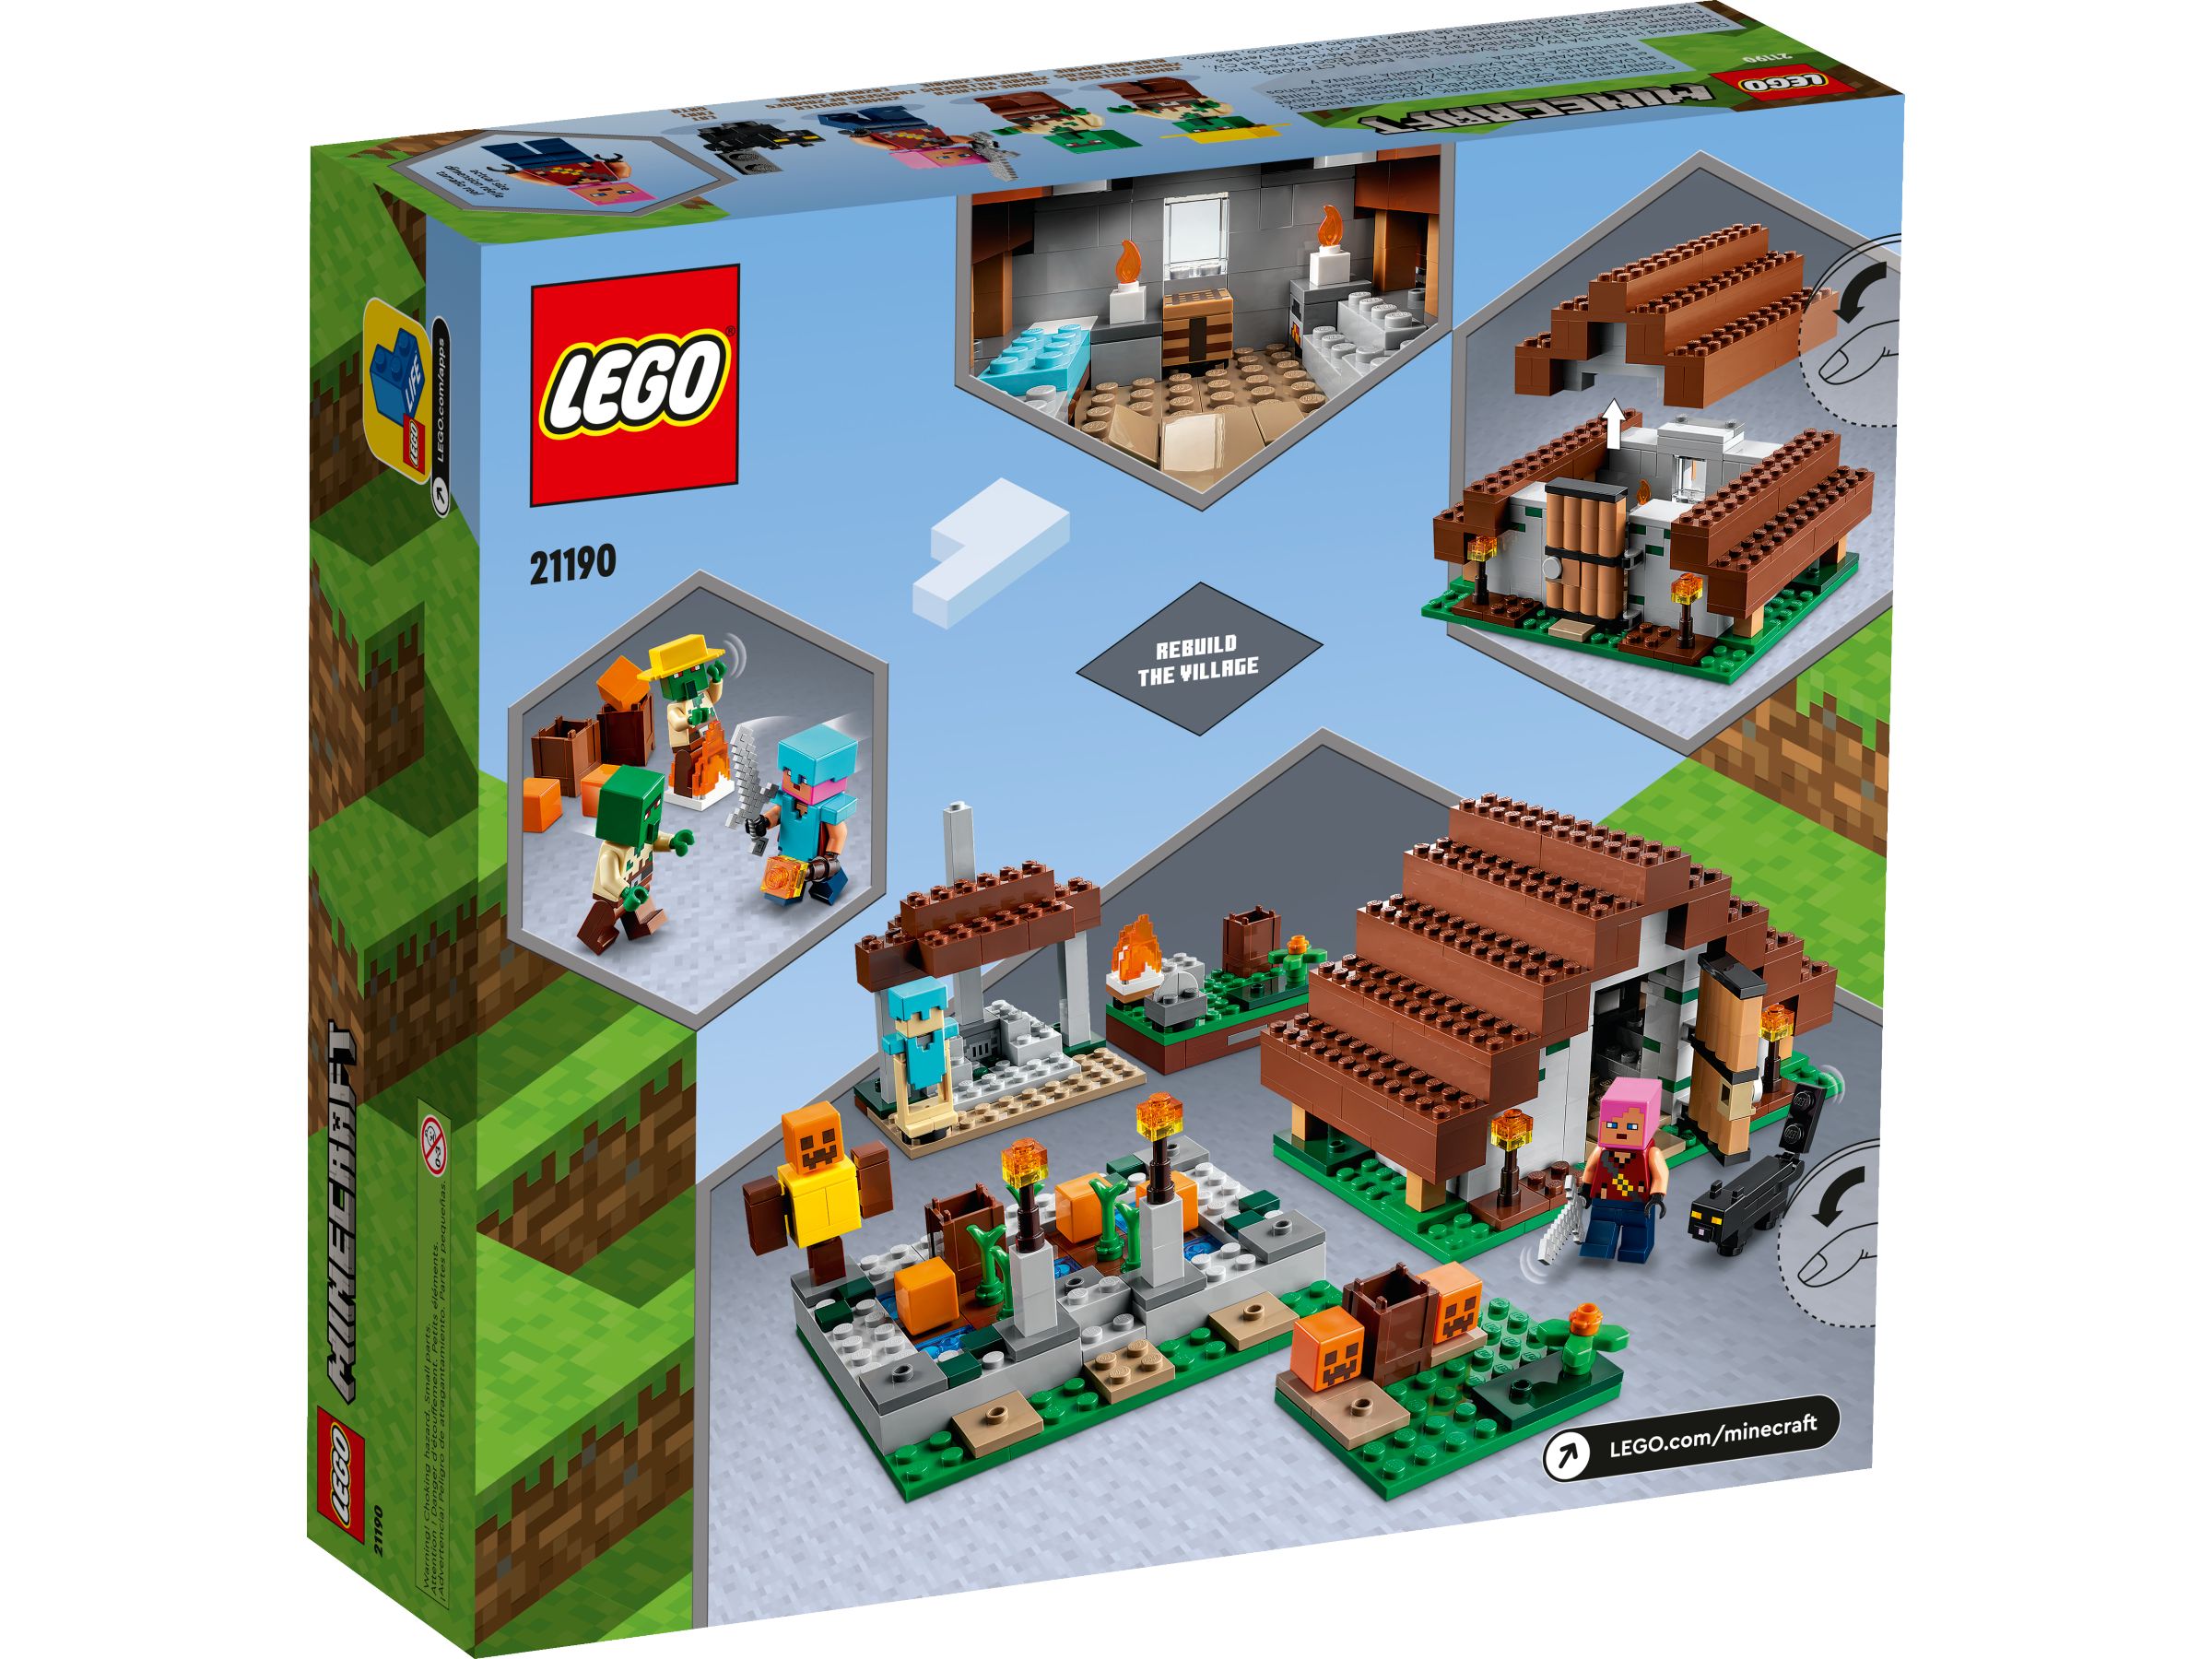 LEGO Minecraft 21190 Das verlassene Dorf LEGO_21190_alt2.jpg